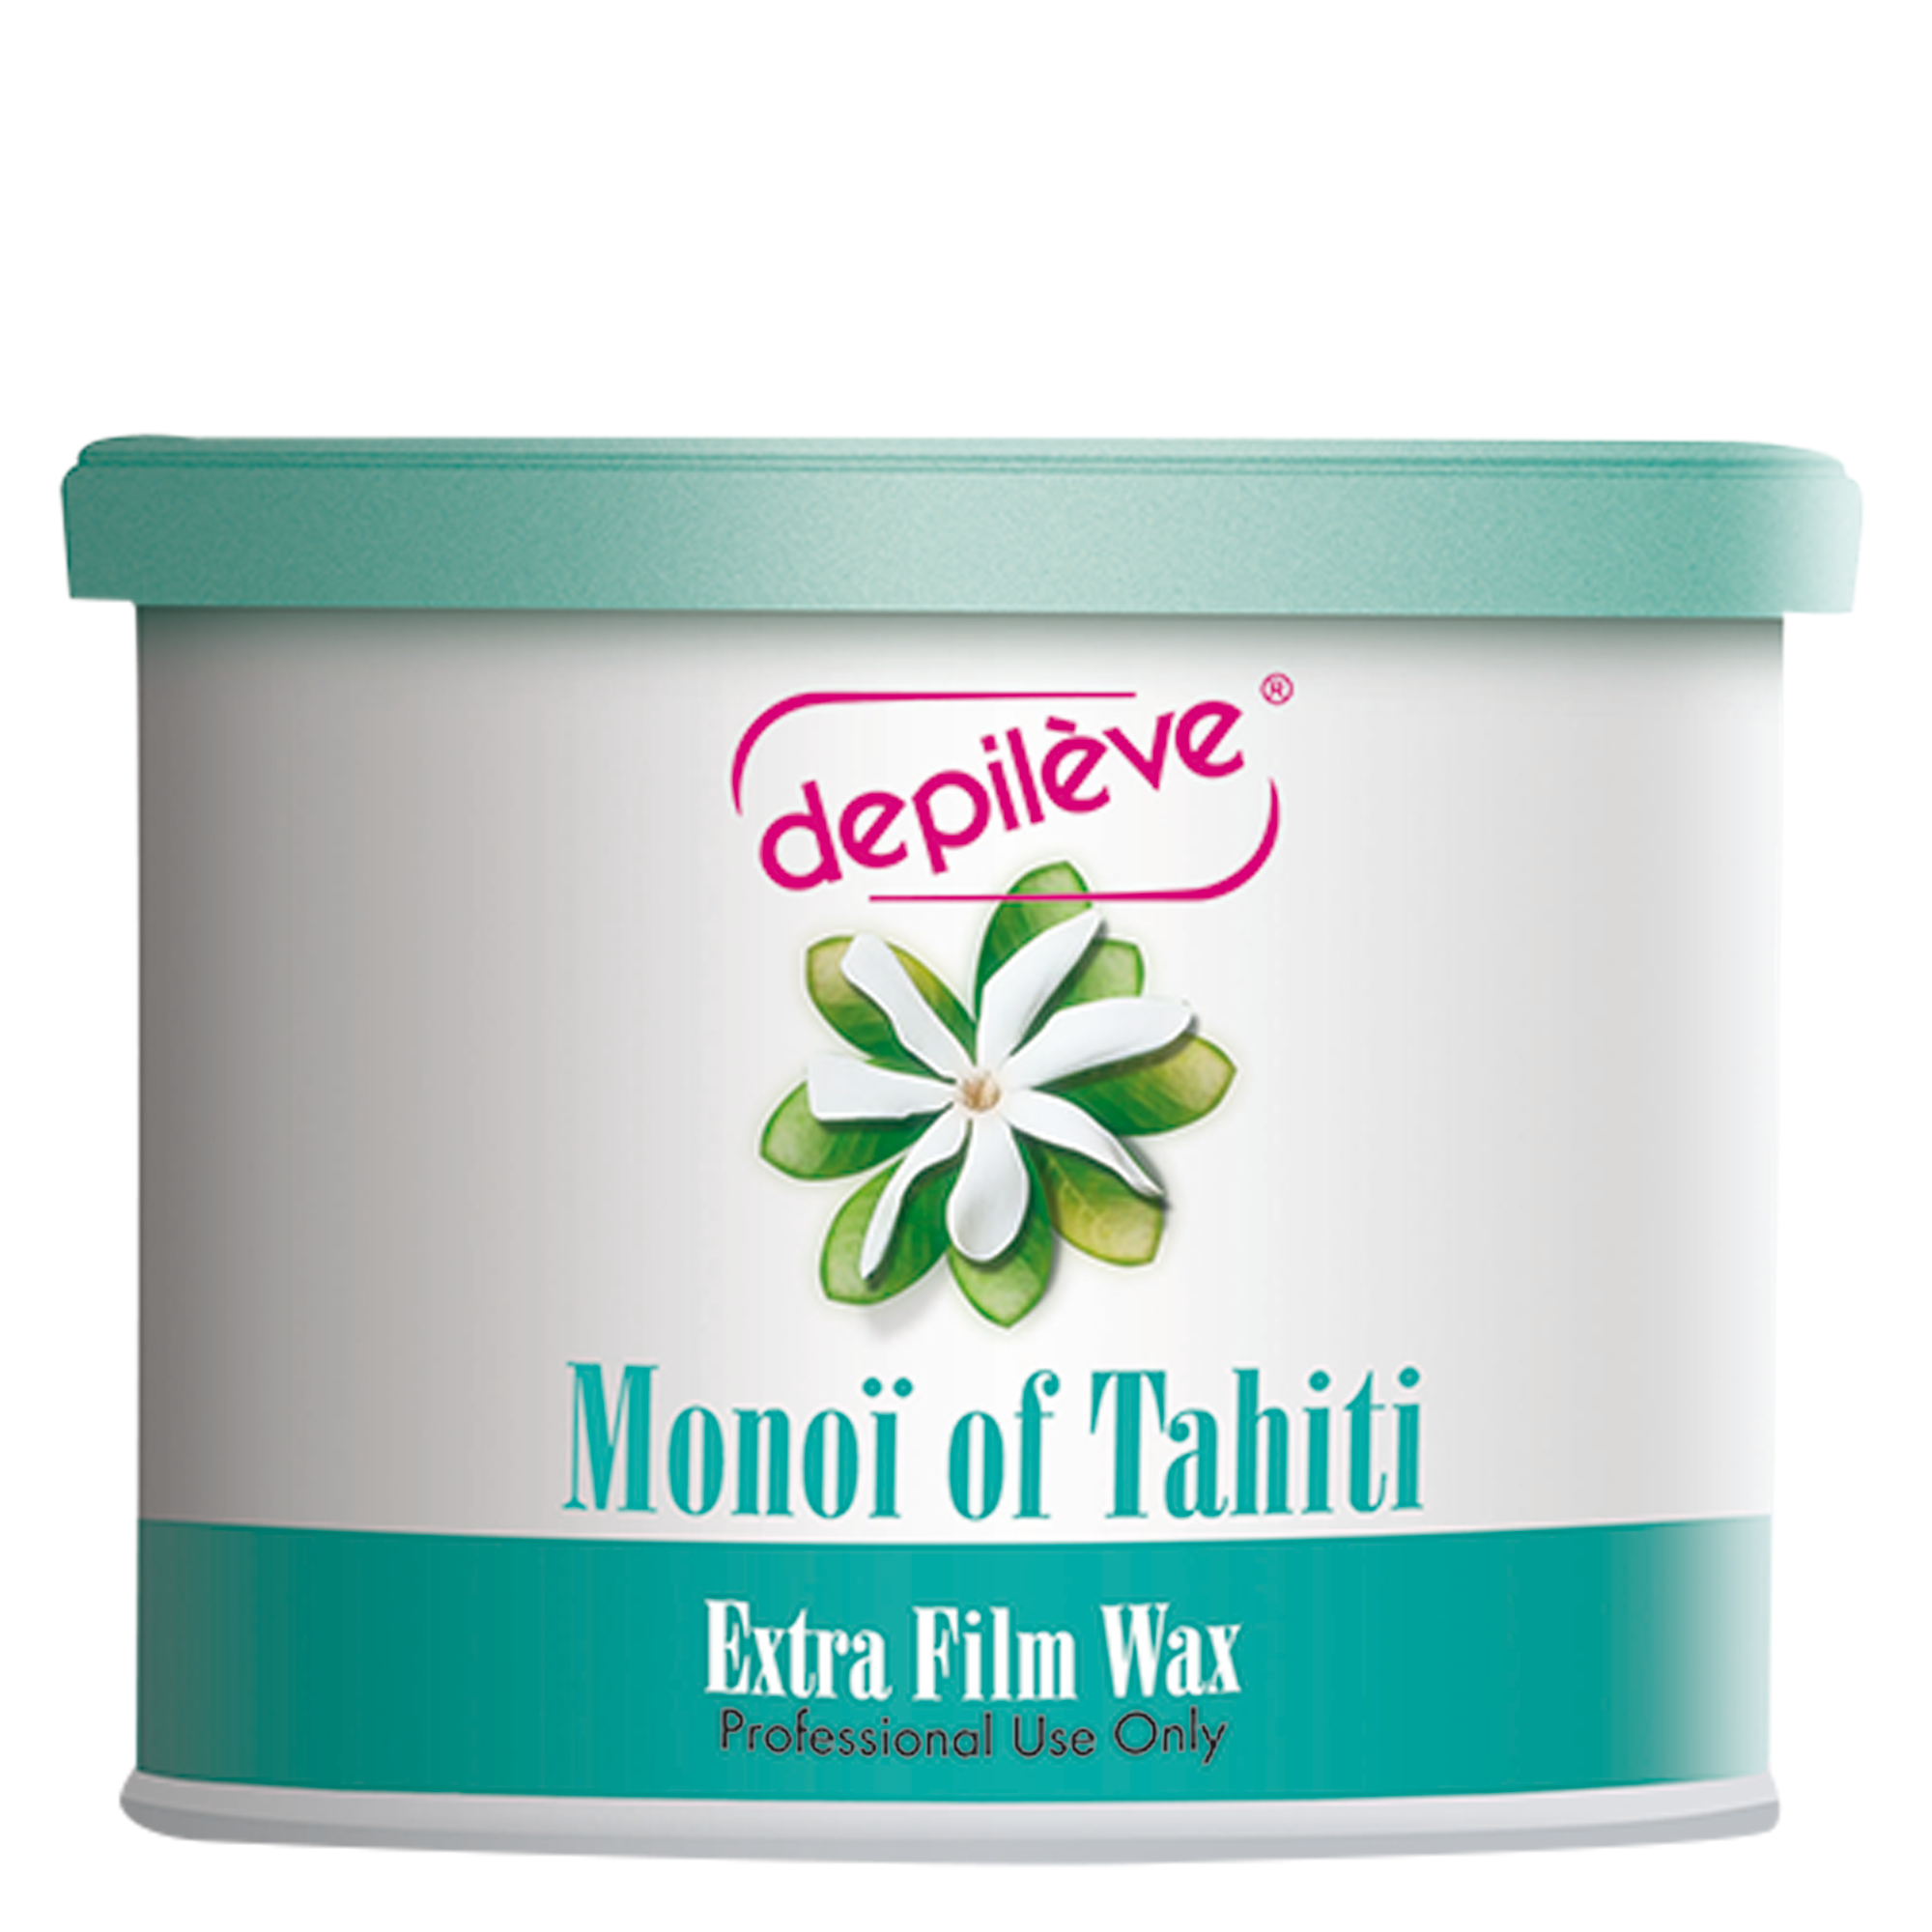 Monoi of Tahiti Extra Film Wax